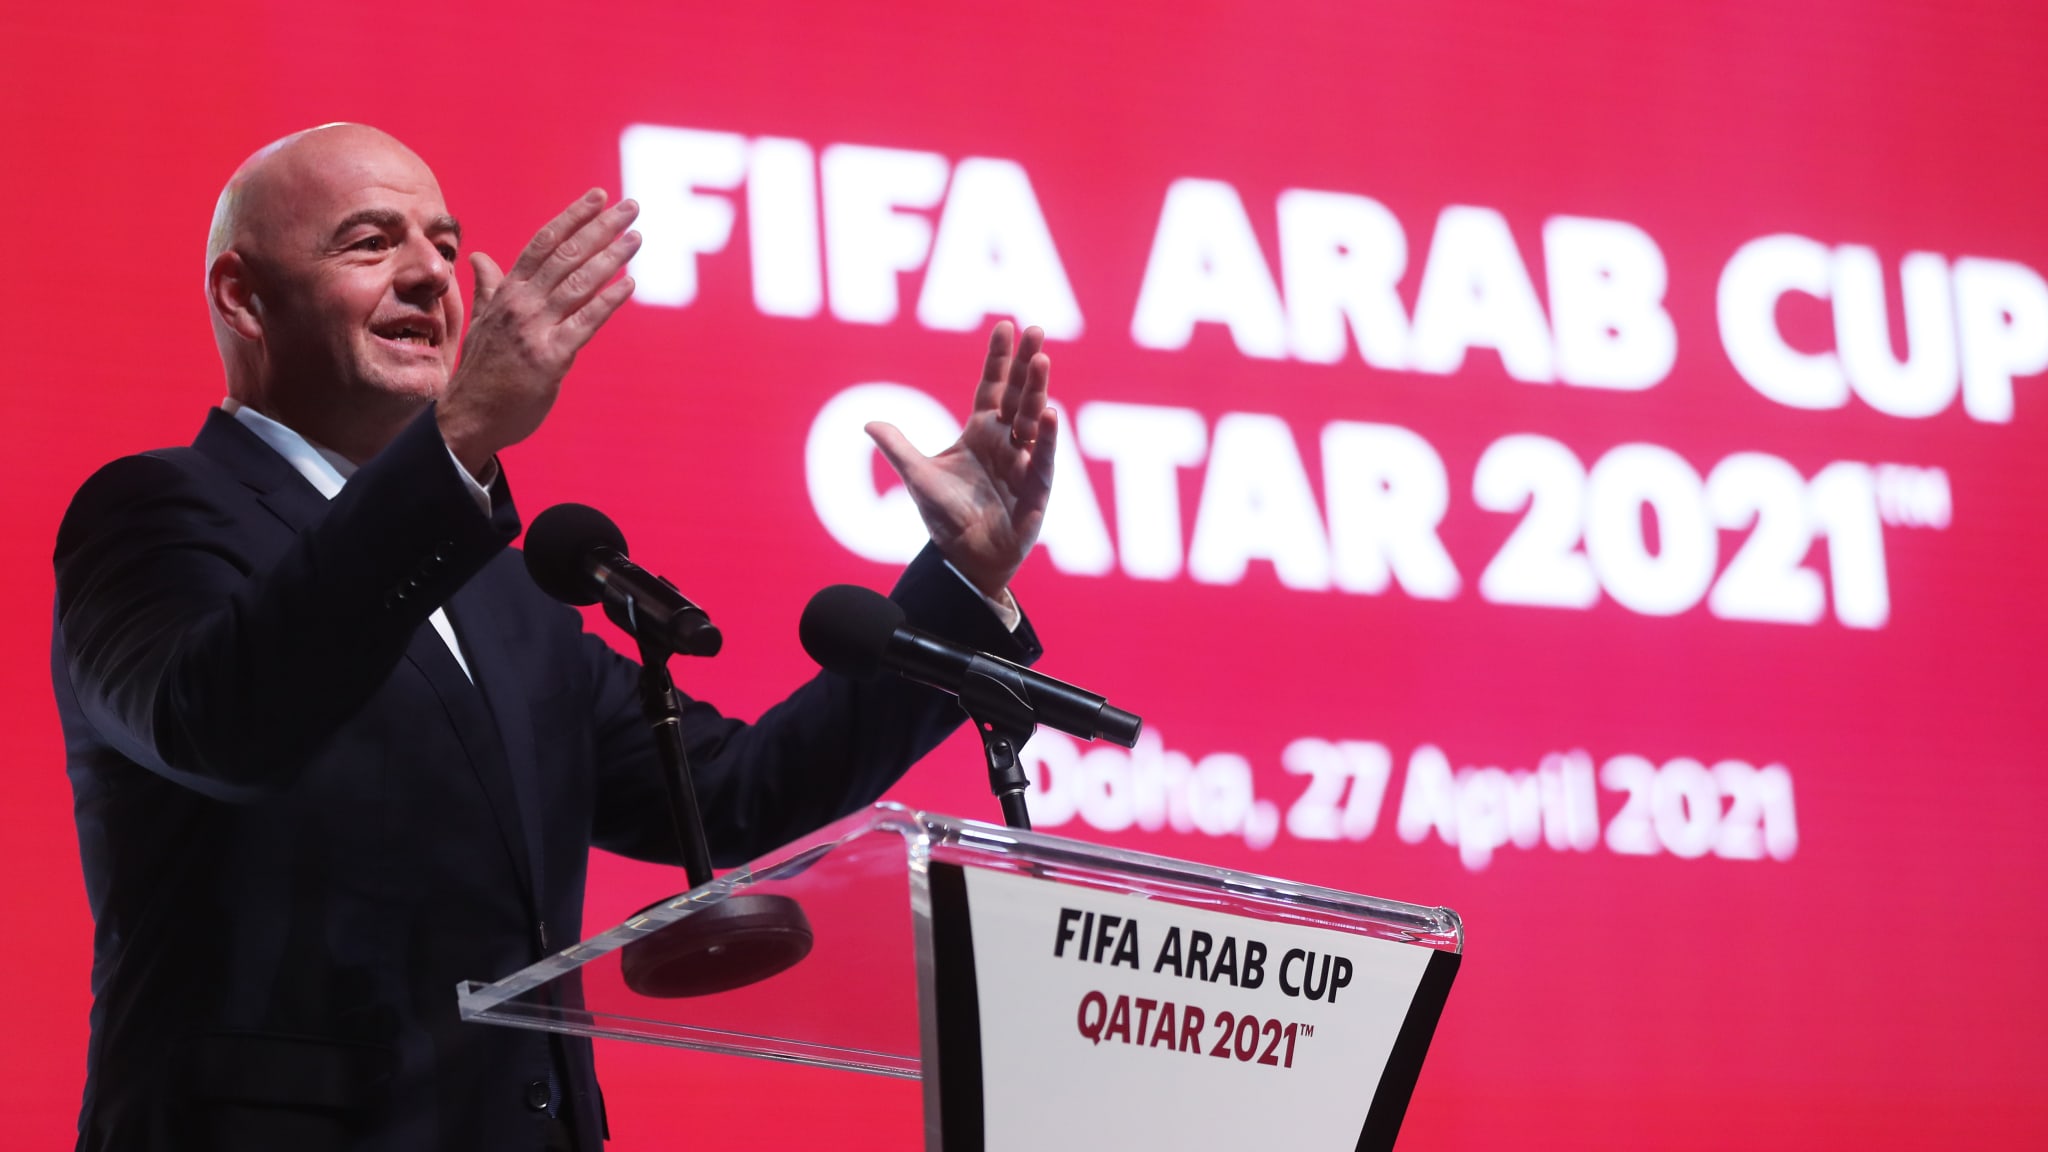 Cup matches arab fifa 2021 FIFA Arab